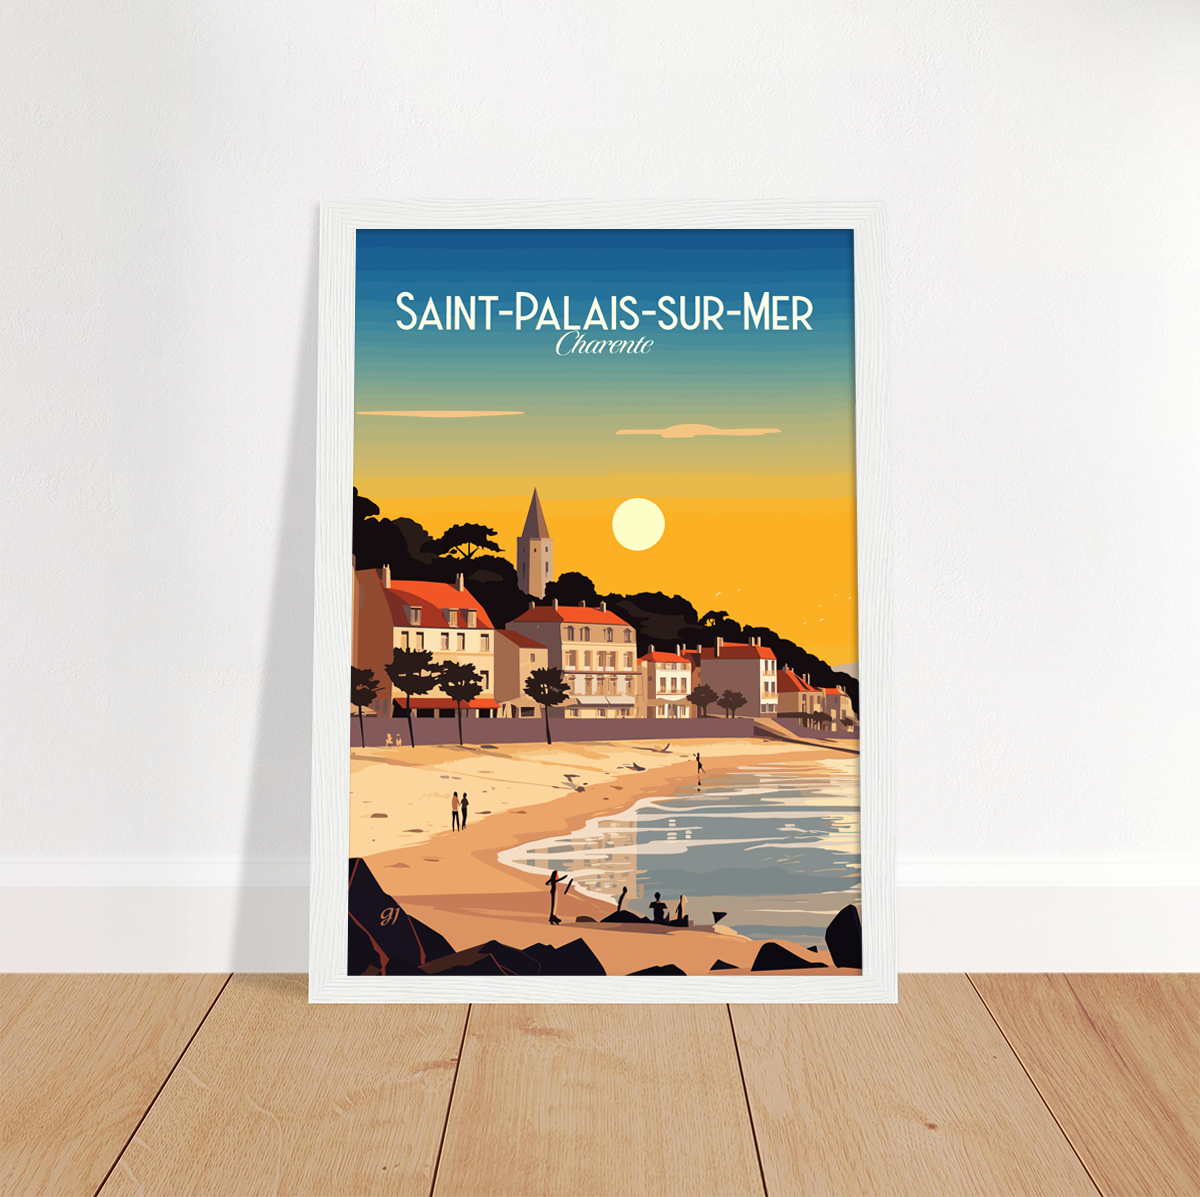 Saint-Palais-sur-Mer poster by bon voyage design